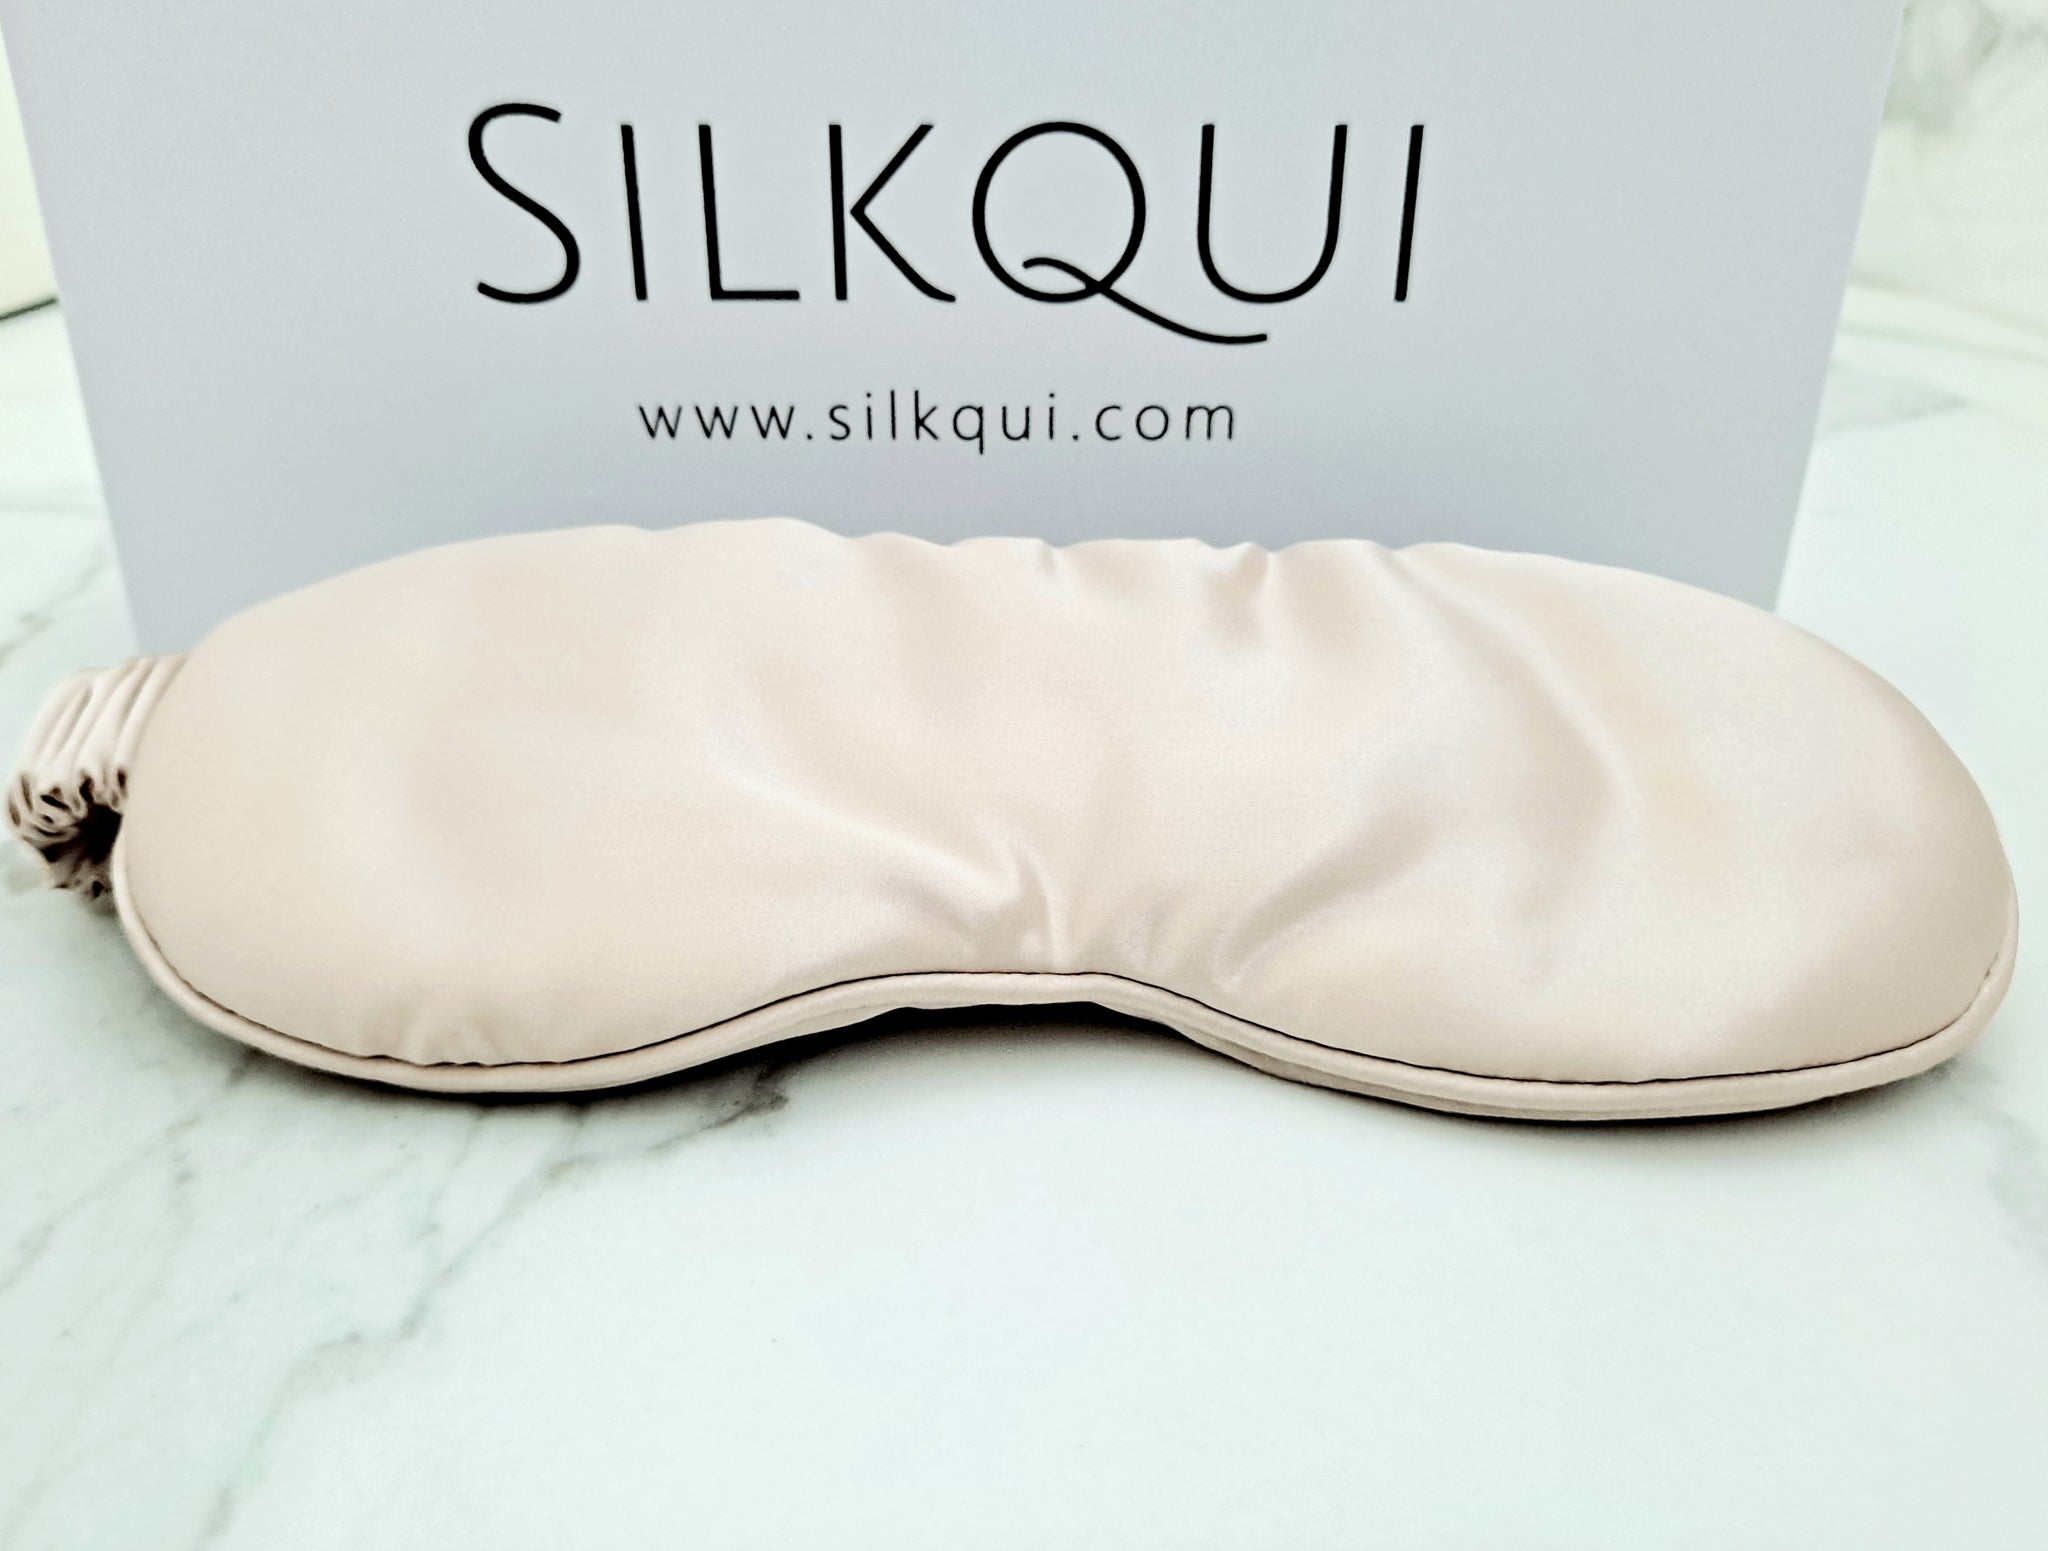 SILKQUI 100% PURE MULBERRY SILK 22 Momme Soft Sleep Eye Mask